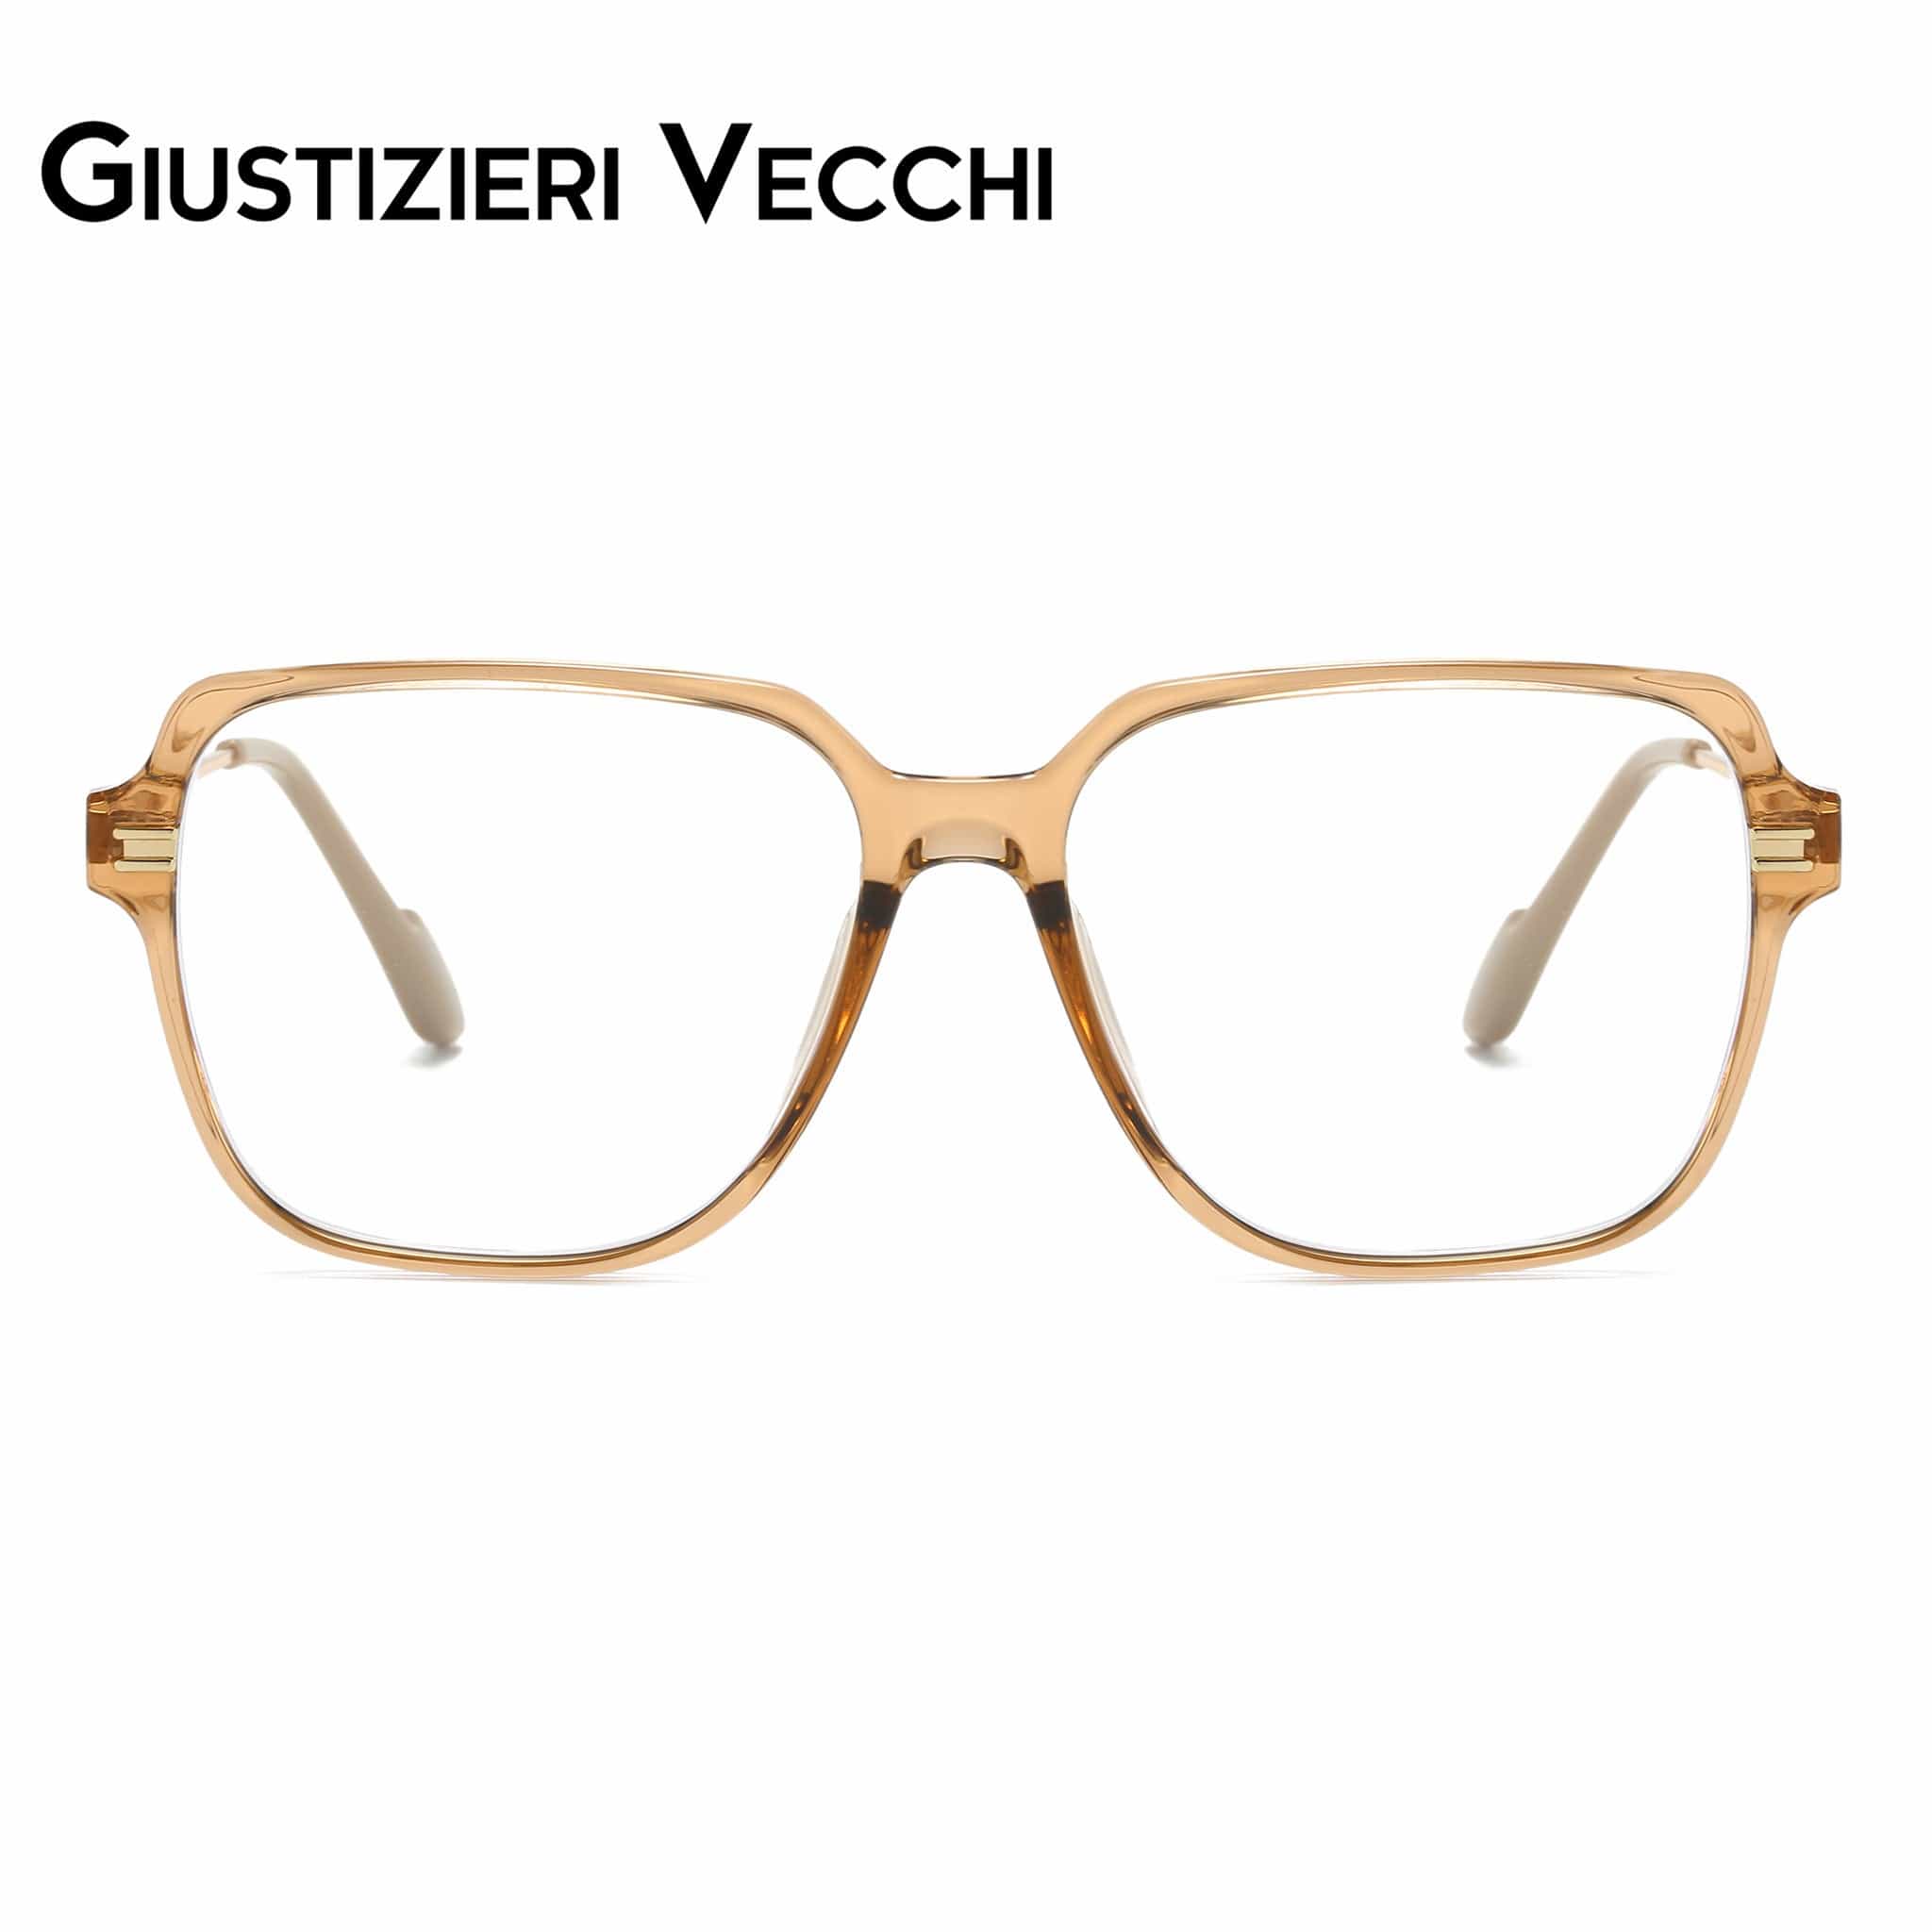 GIUSTIZIERI VECCHI Eyeglasses Large / Brandy Crystal MysticRider Duo